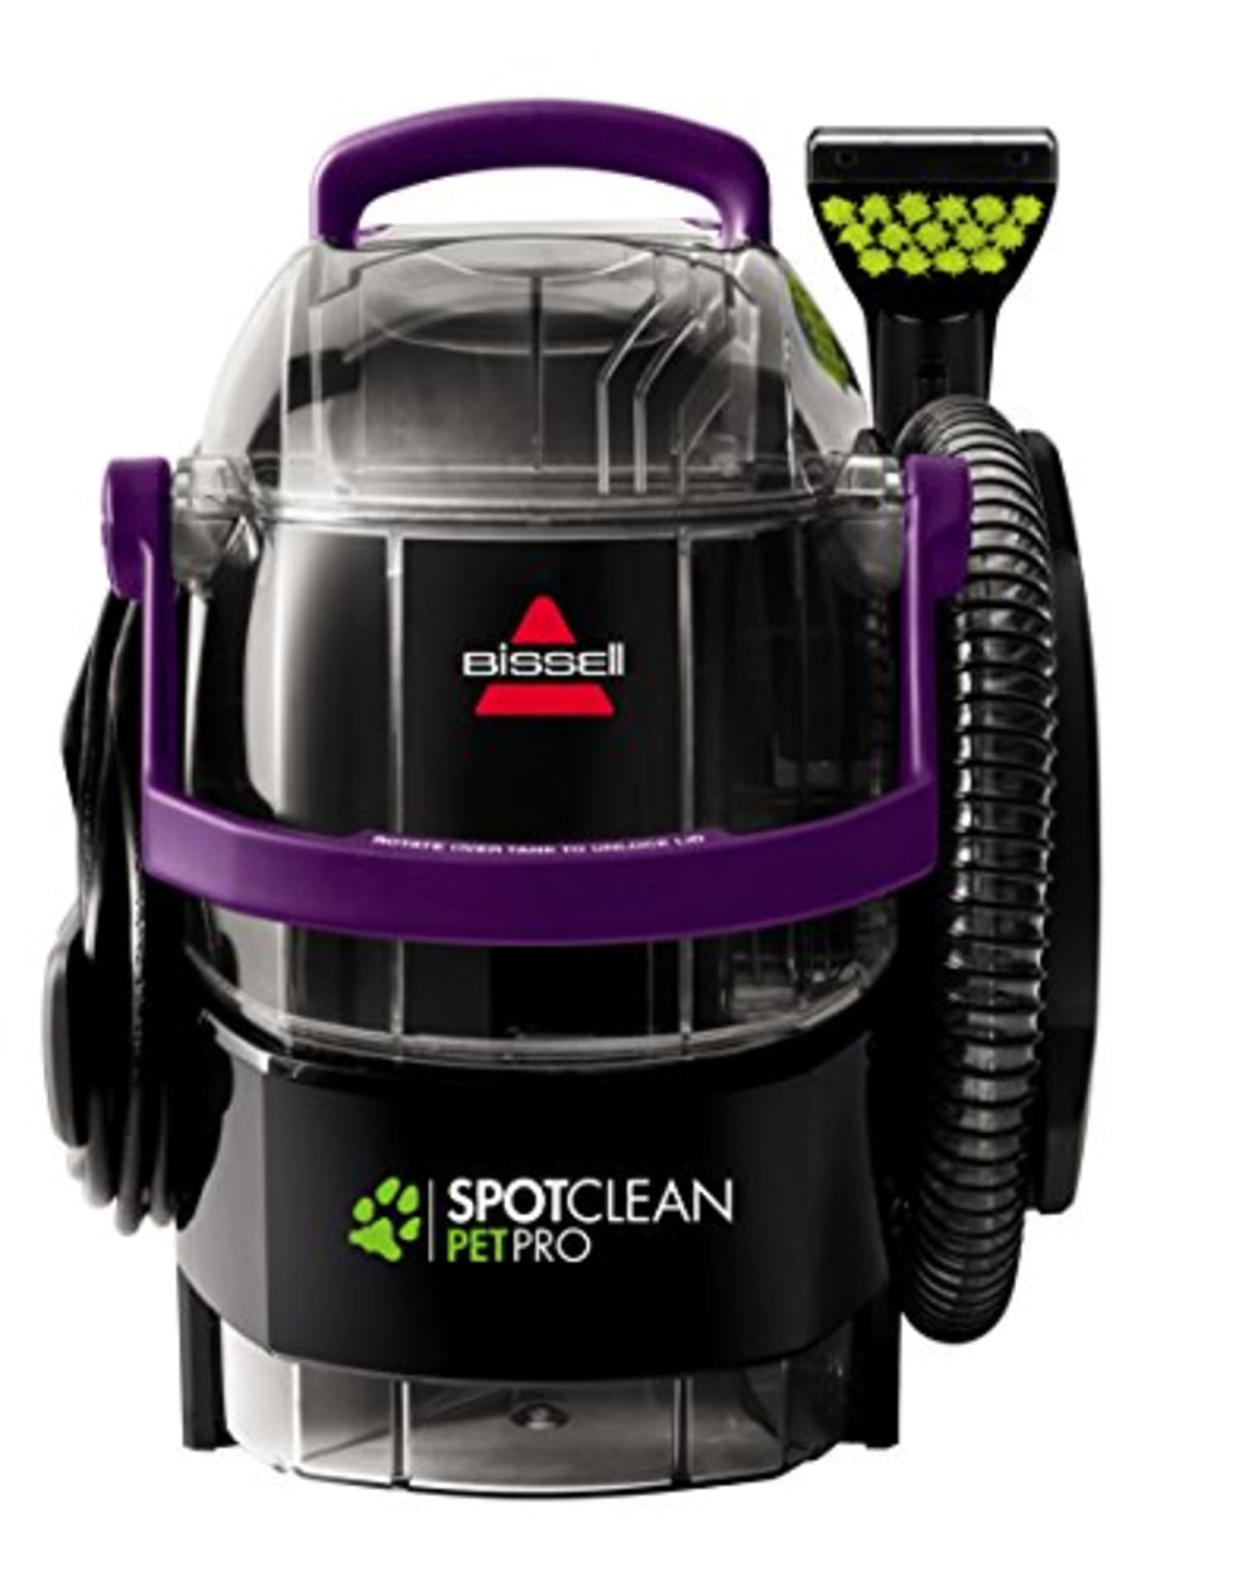 BISSELL SpotClean Pet Pro Portable Carpet Cleaner, 2458, Grapevine Purple, Black, Large (AMAZON)